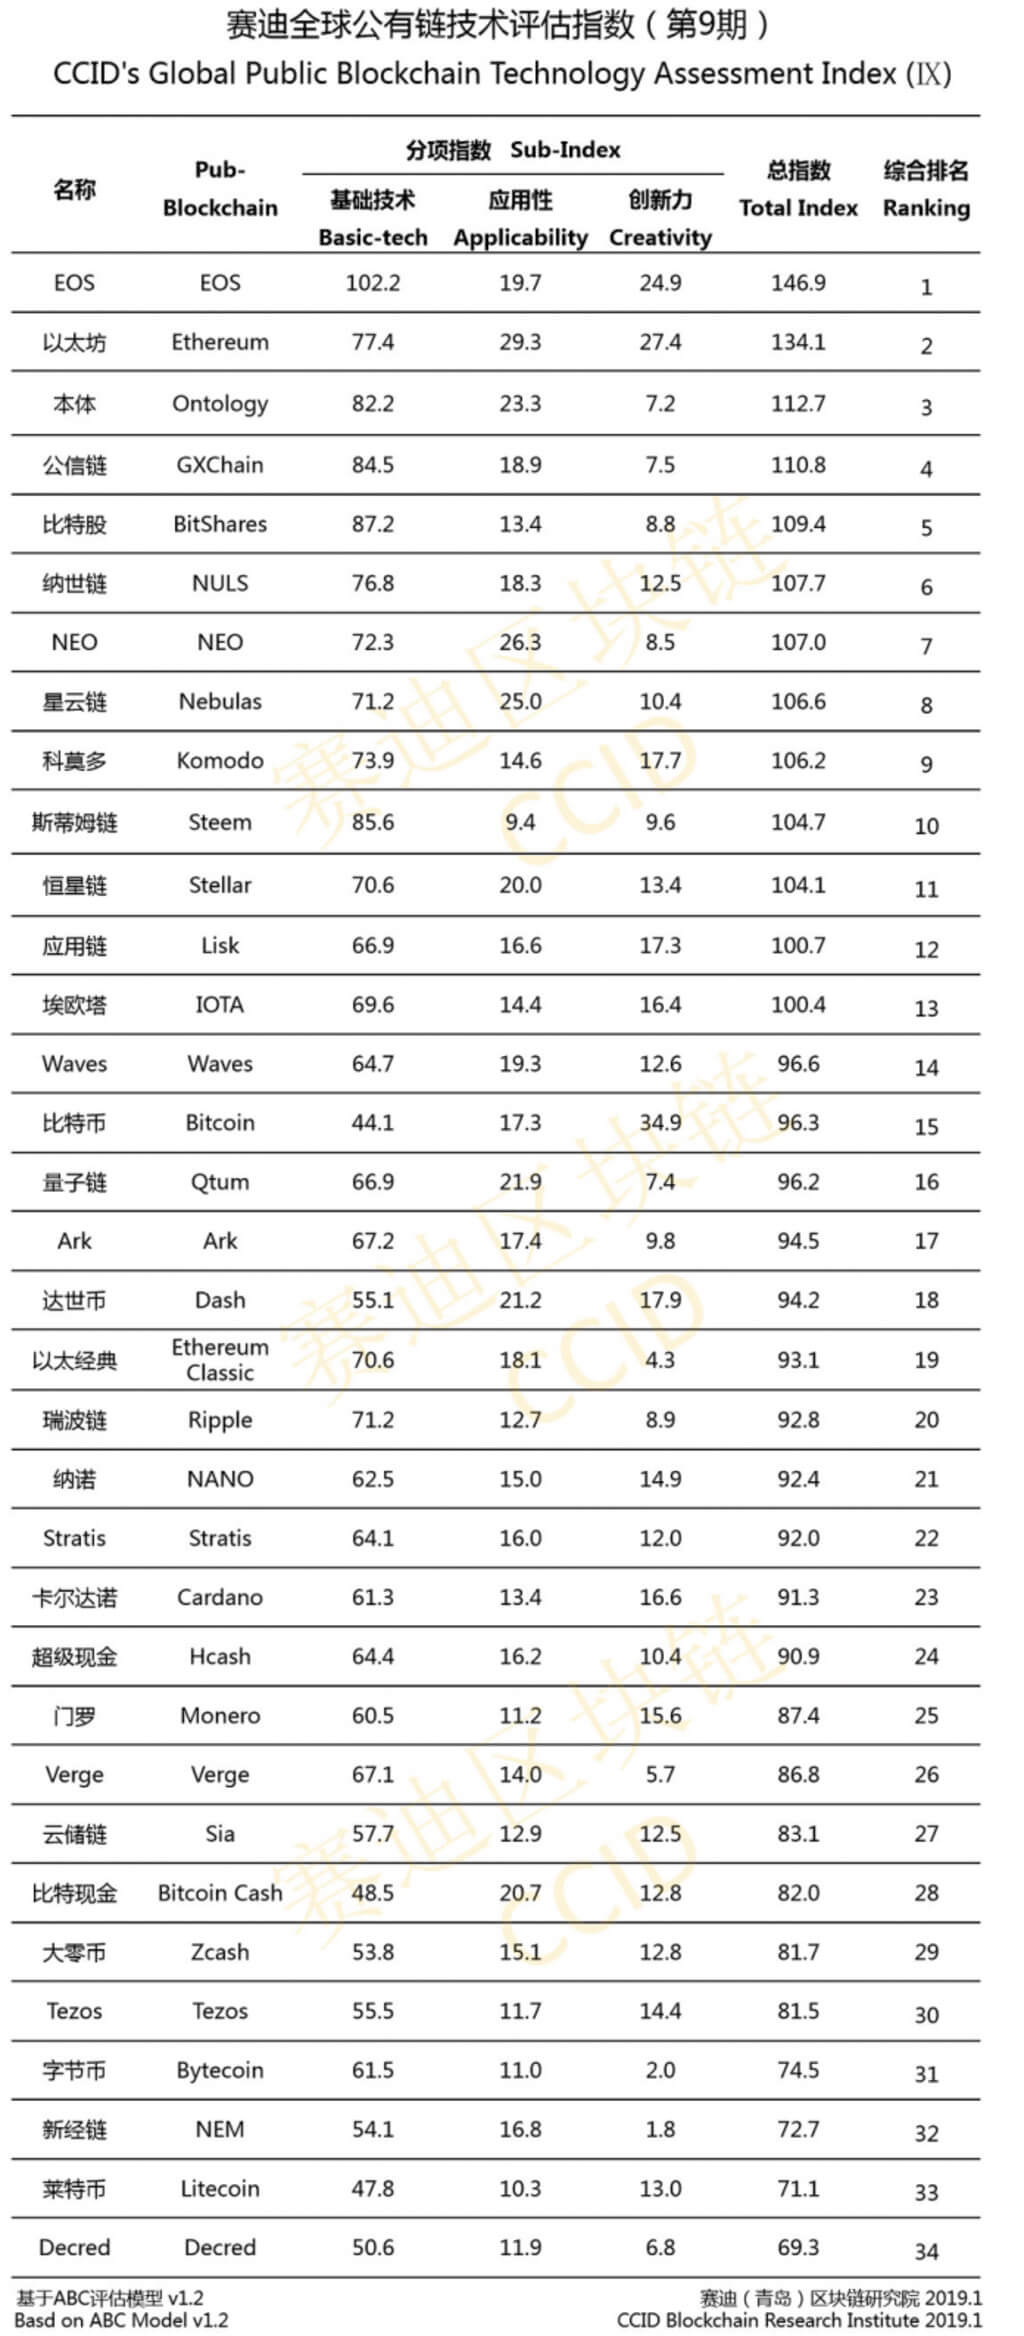 China atualizou o seu ranking криптовалют. Биткоин pulou para cima